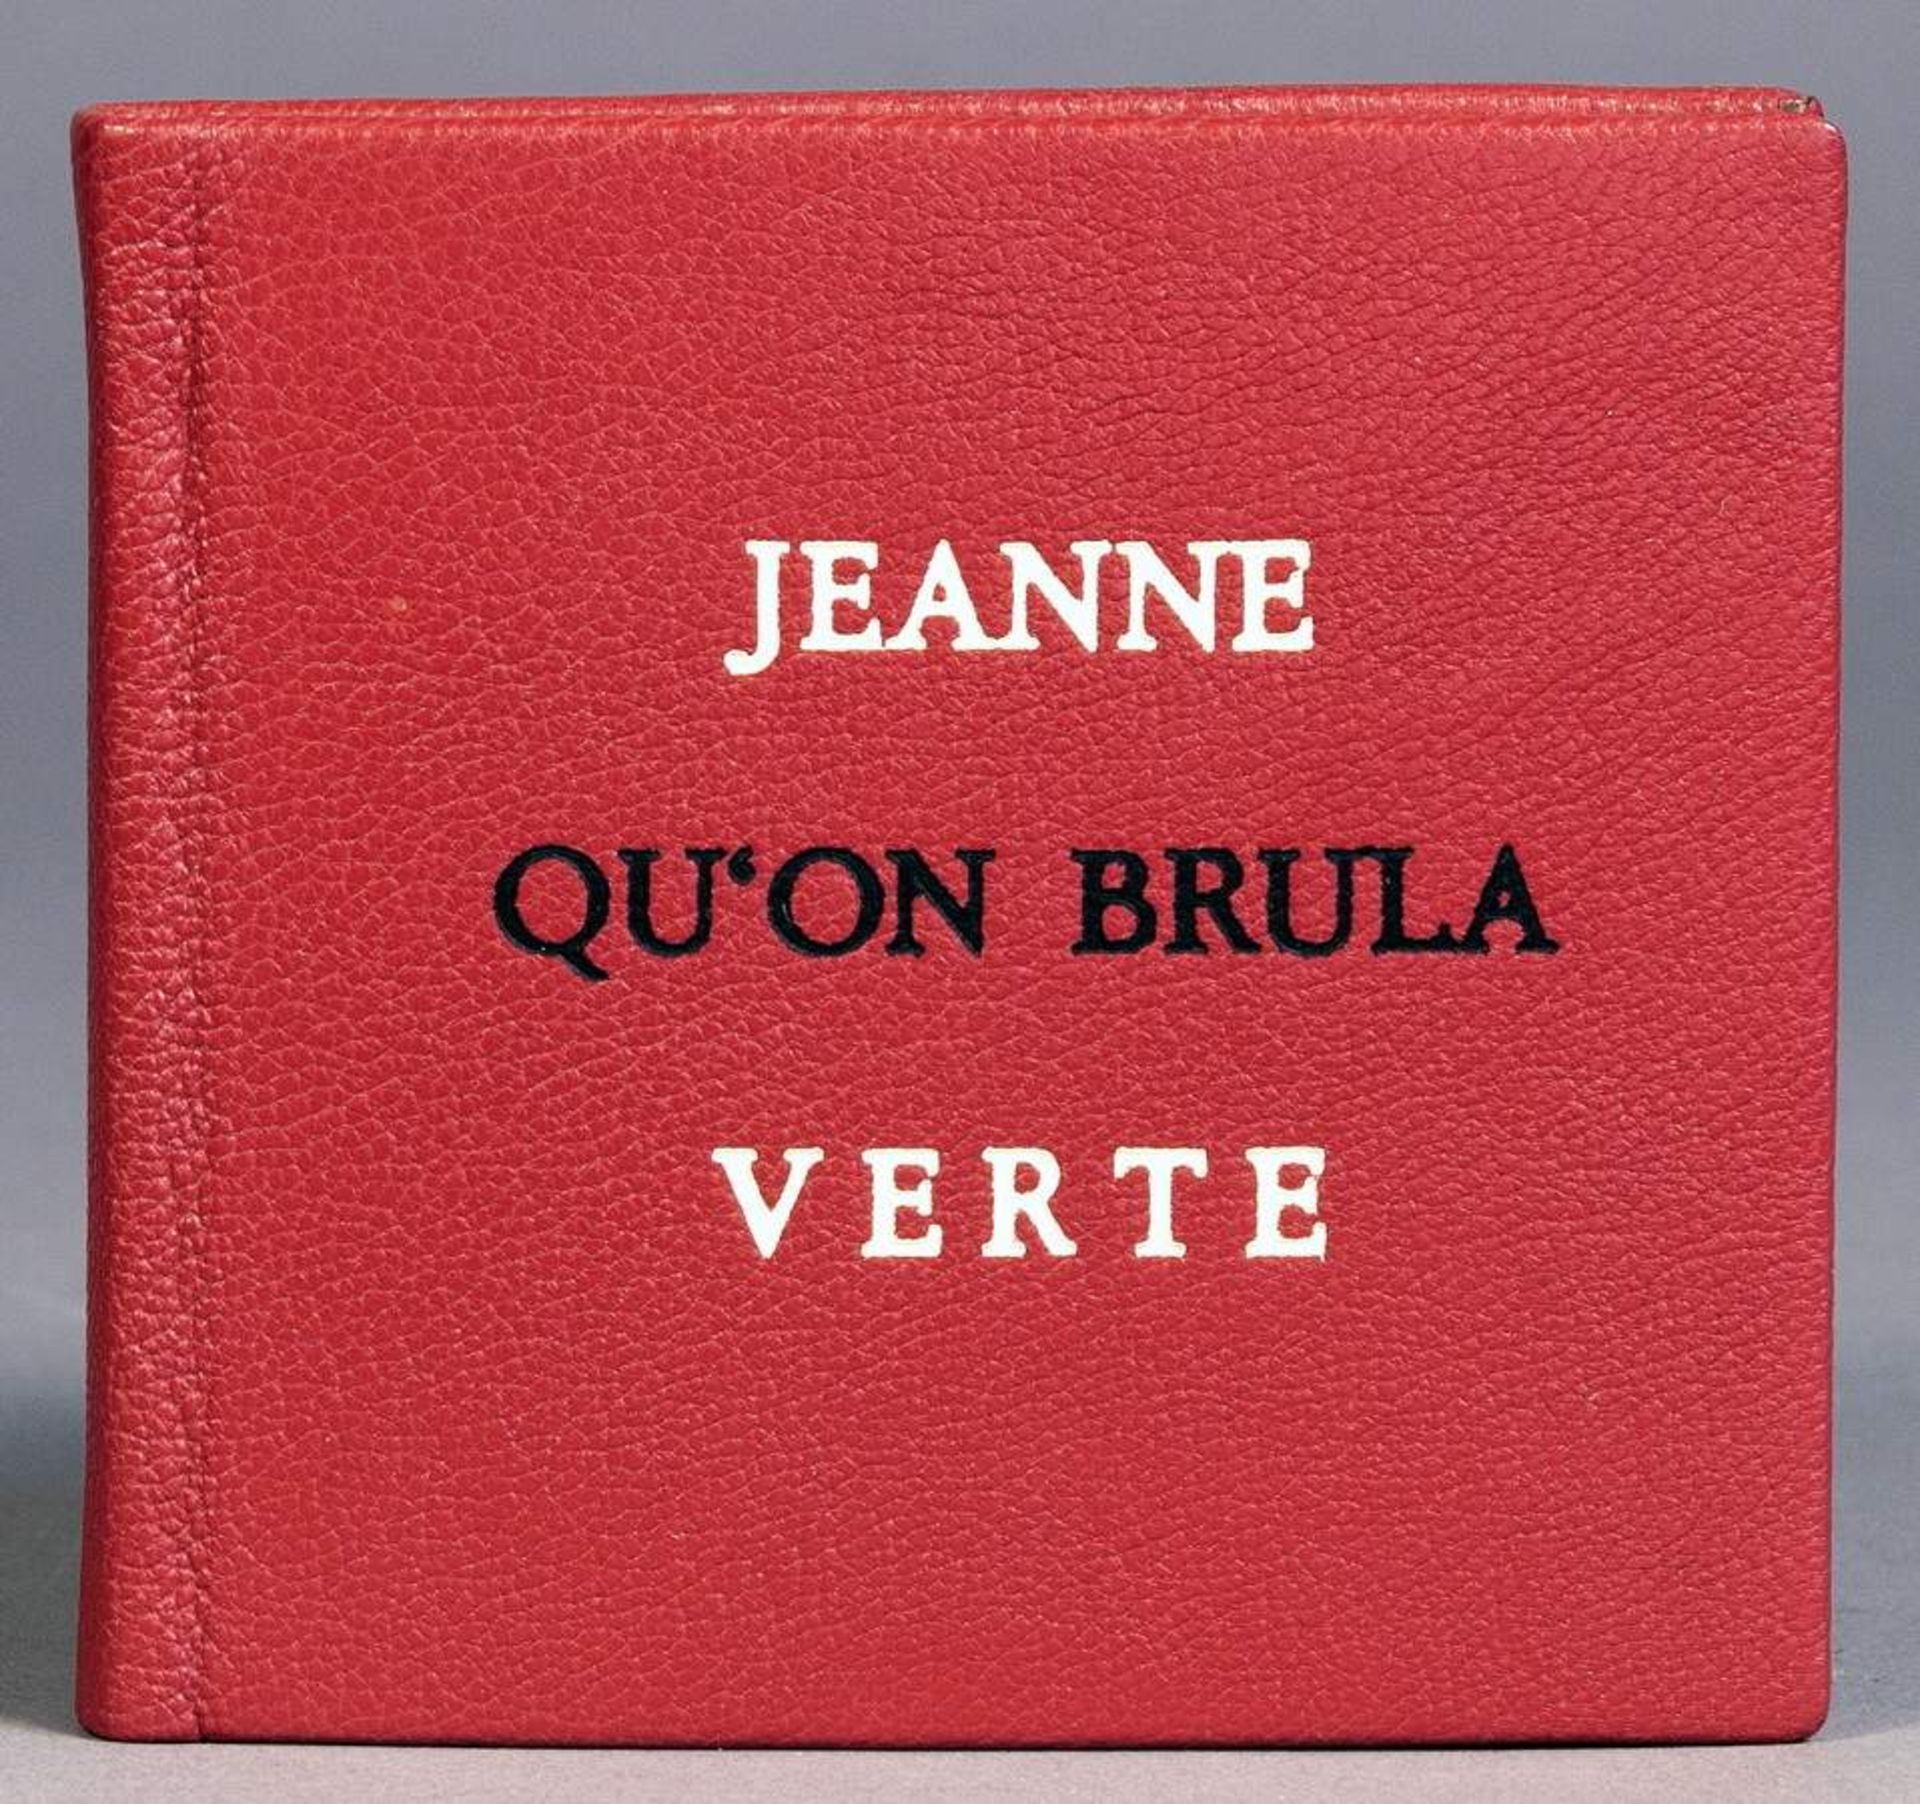 René Char. Jeanne quon brula verte. Alés, P[aul] A[ndré] B[enoit] 1956. Mit einem Frontispiz nach